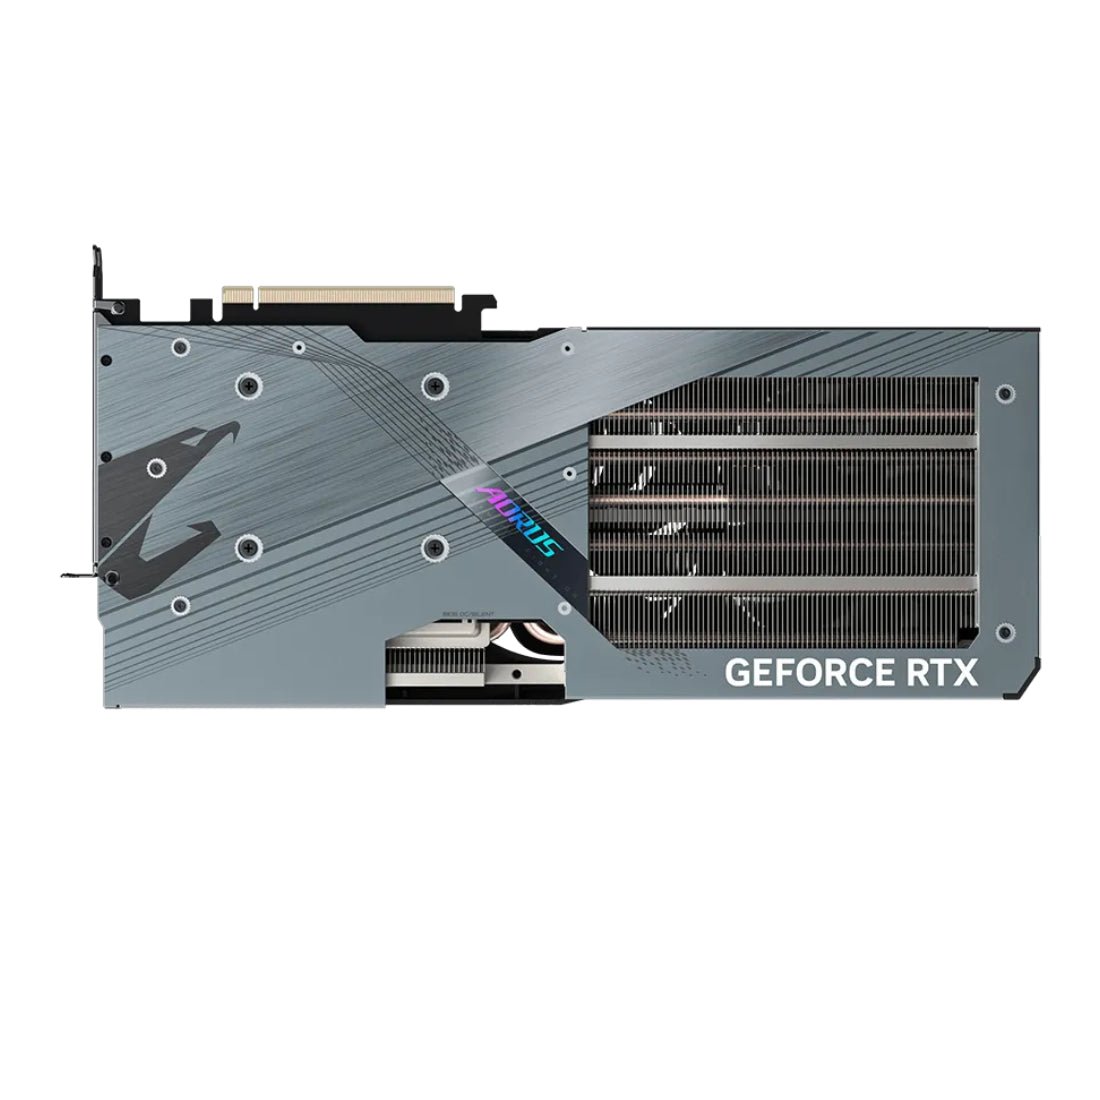 Gigabyte Aorus GeForce RTX 4070 Ti Master 12G GDDR6X Graphics Card - كرت الشاشة - Store 974 | ستور ٩٧٤